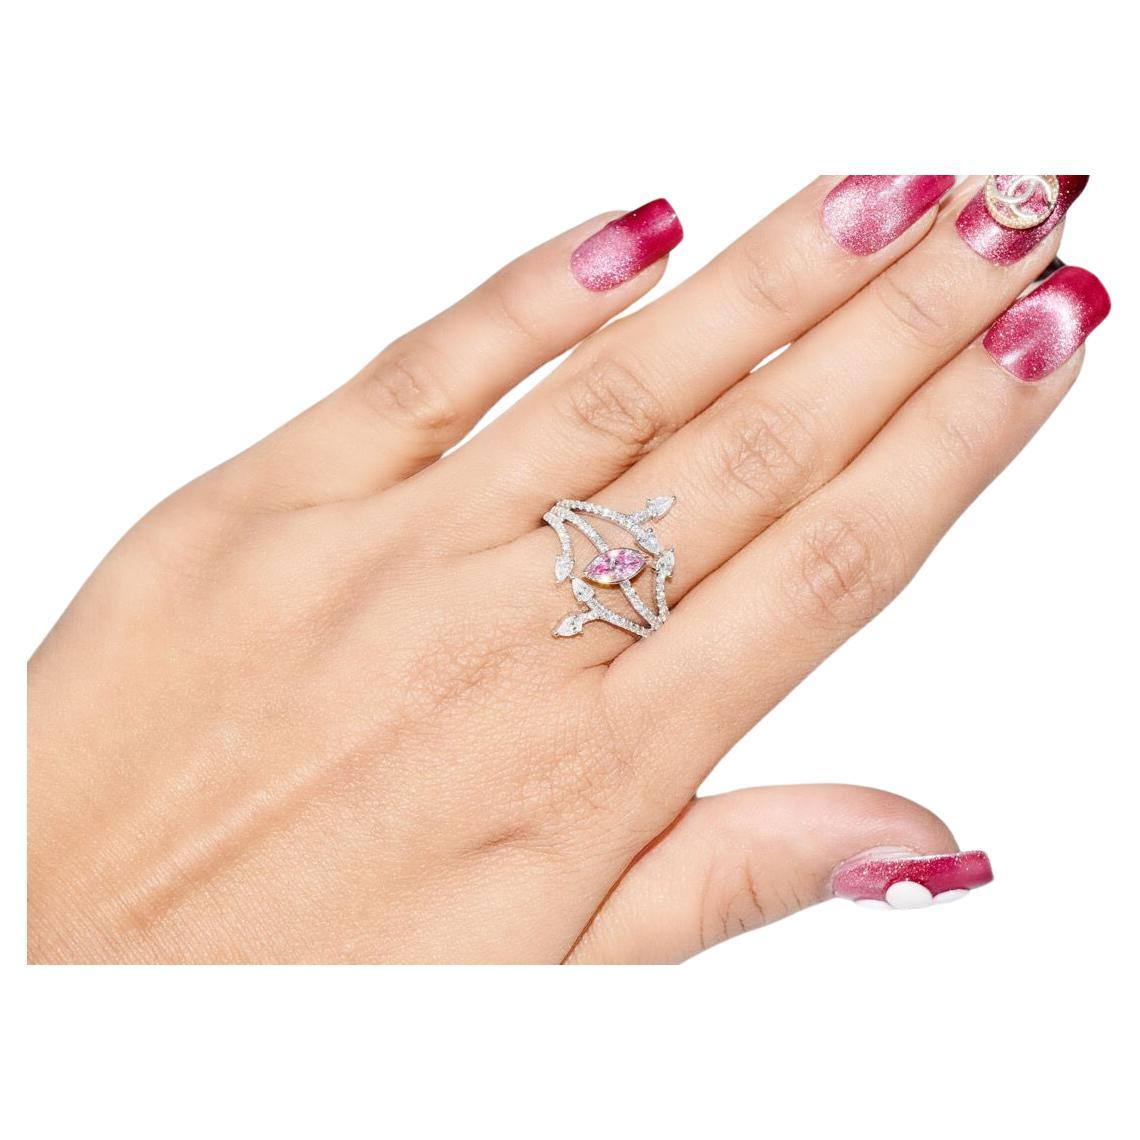 GIA zertifiziert 0,31 Karat Faint Pink Diamond Ring VS2 Klarheit im Angebot